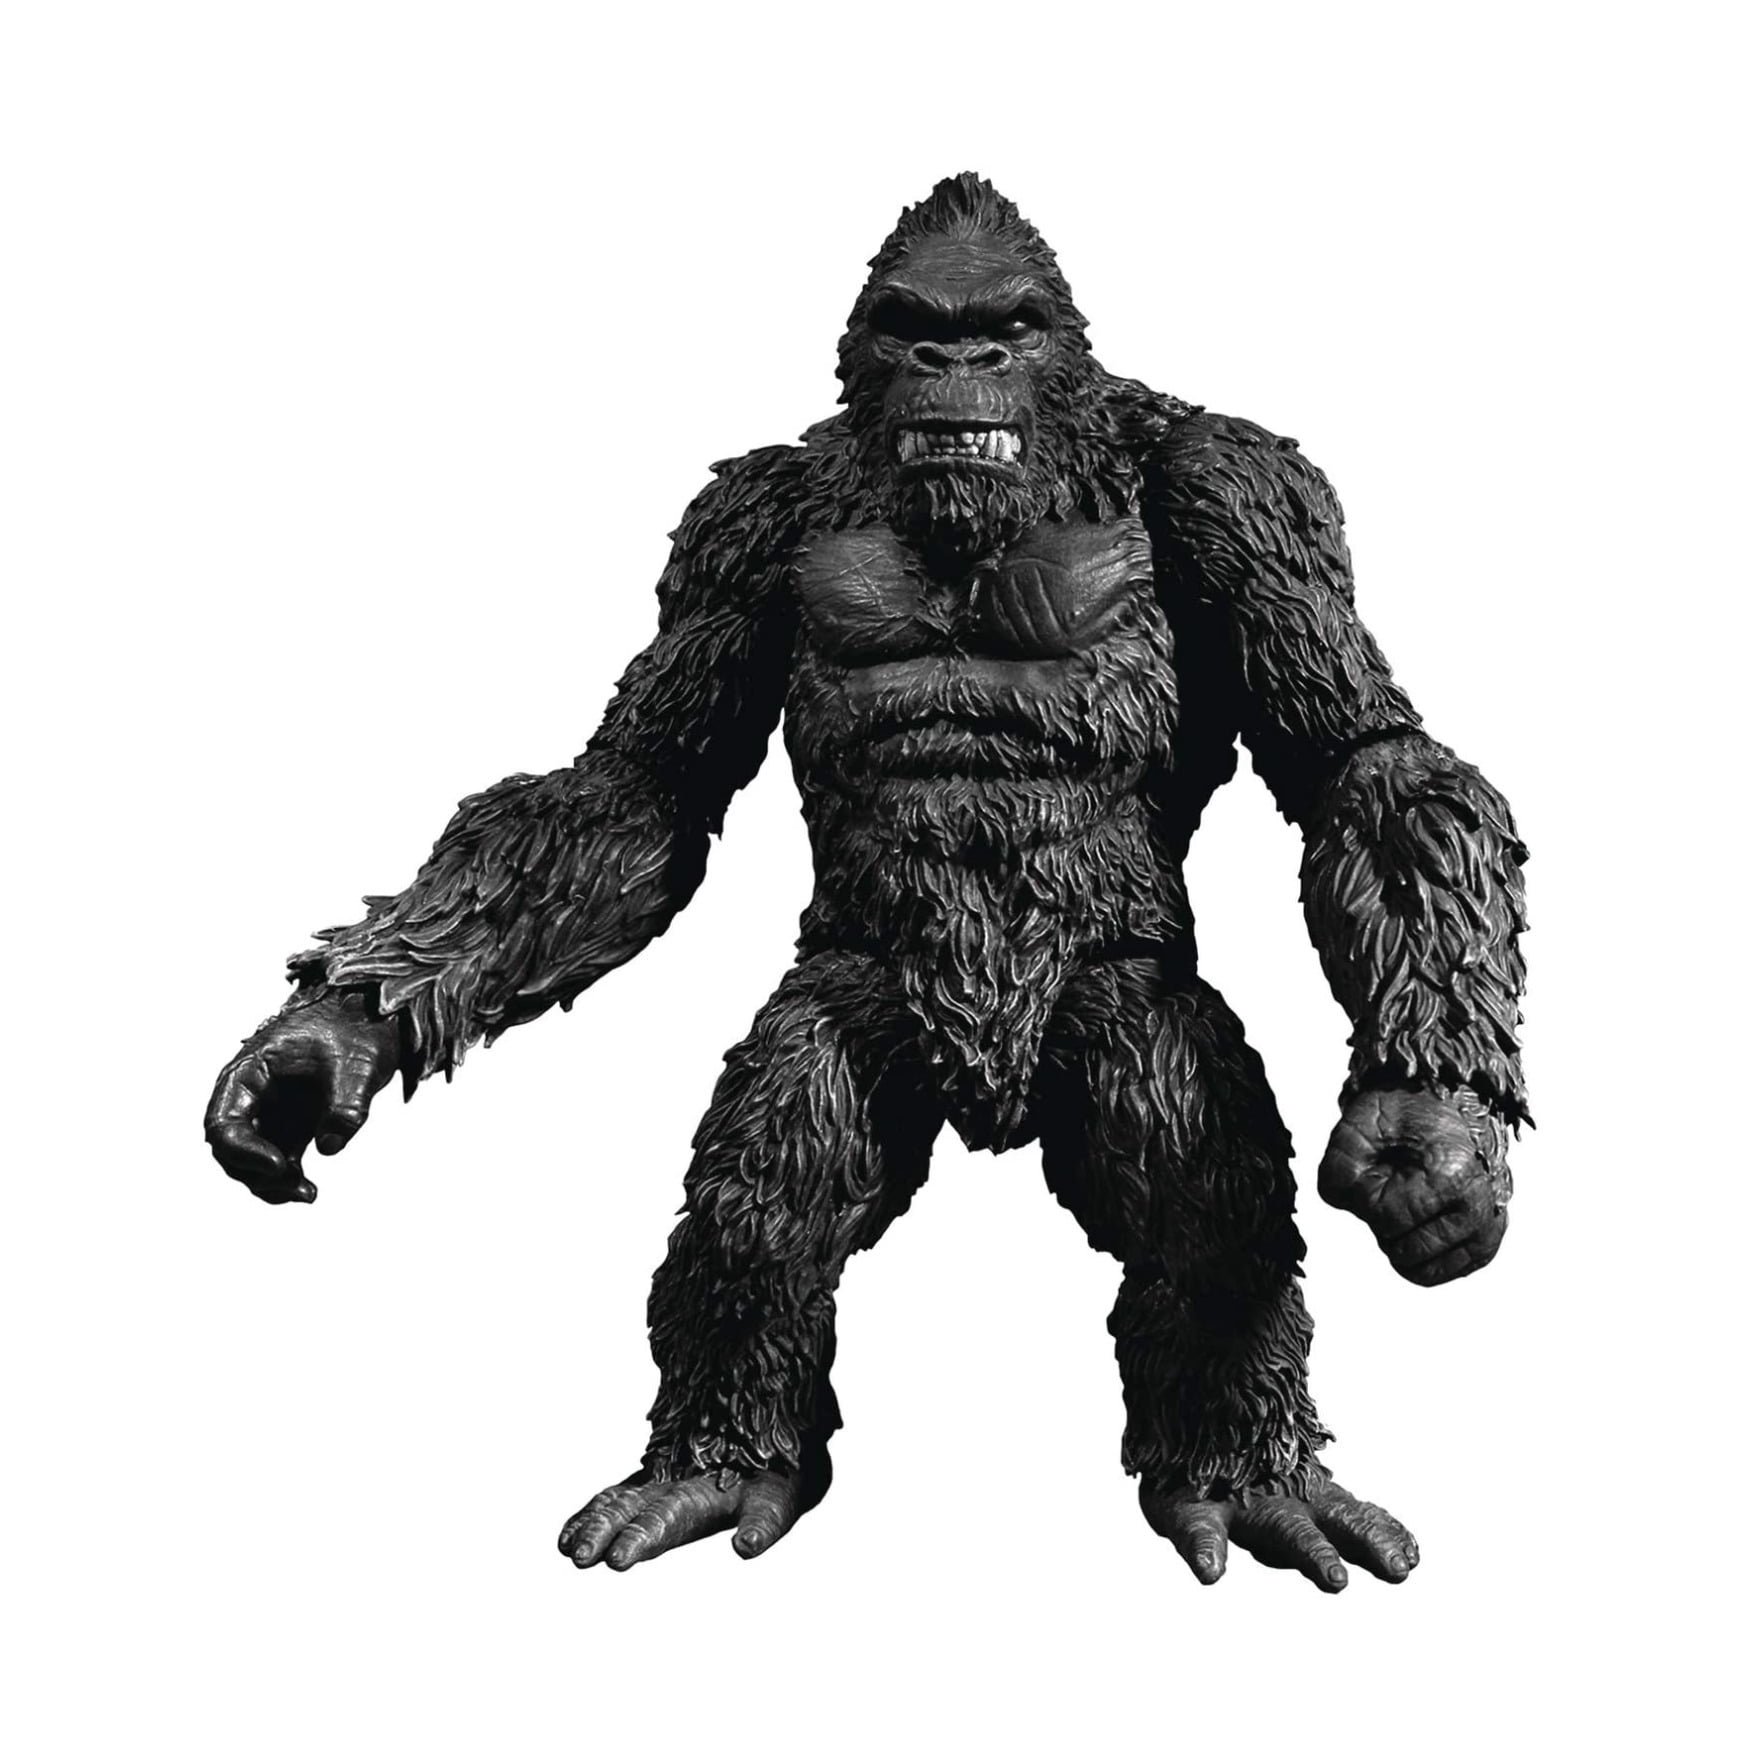 Mezco Toys King Kong of Skull Island Black & White Version 7